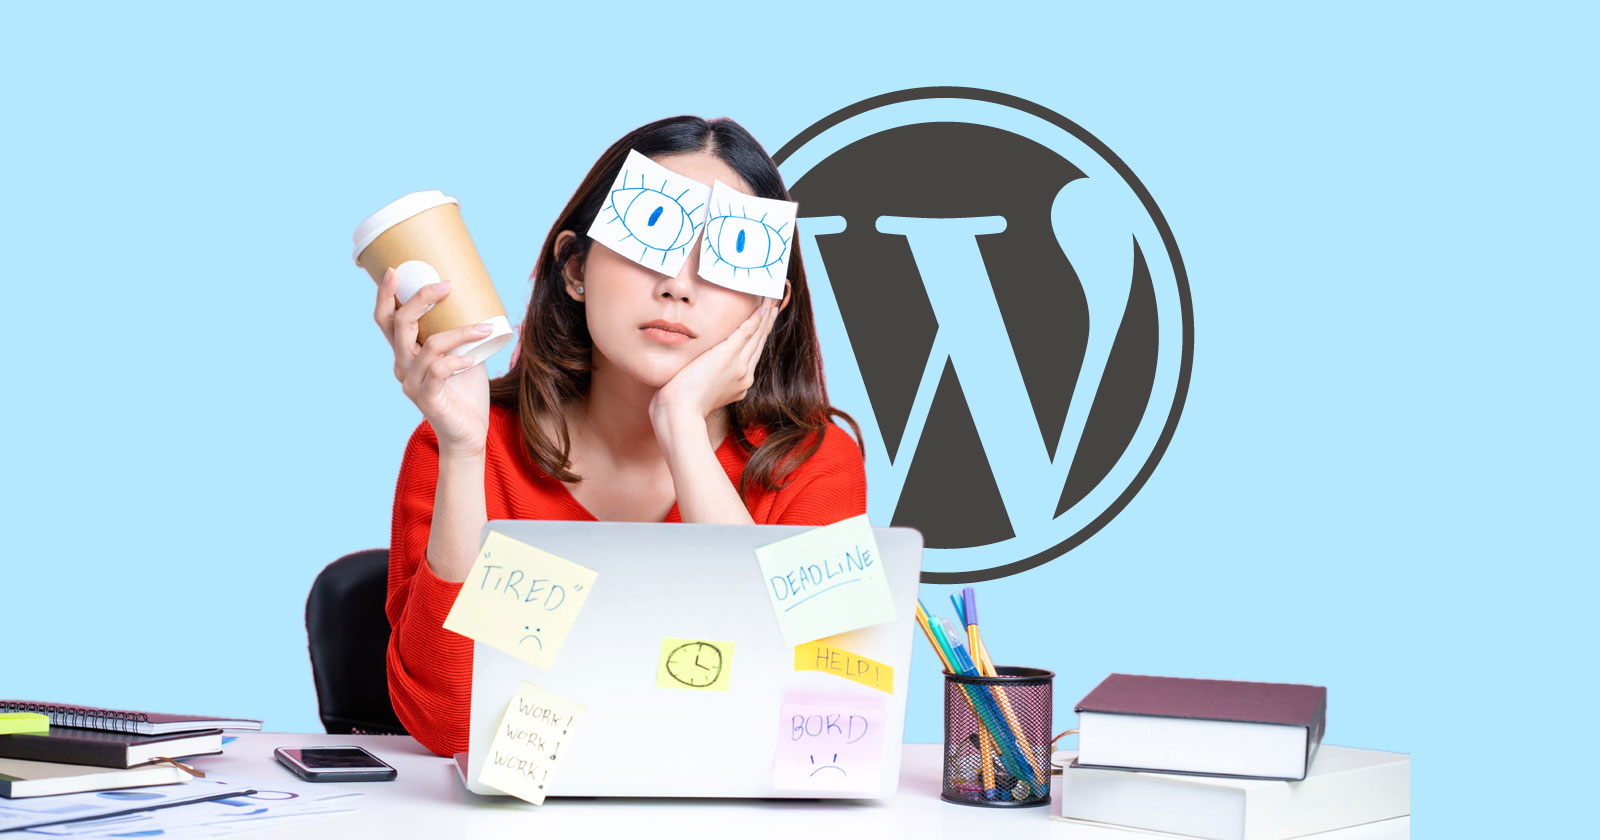 WordPress 6.5 Release Delayed